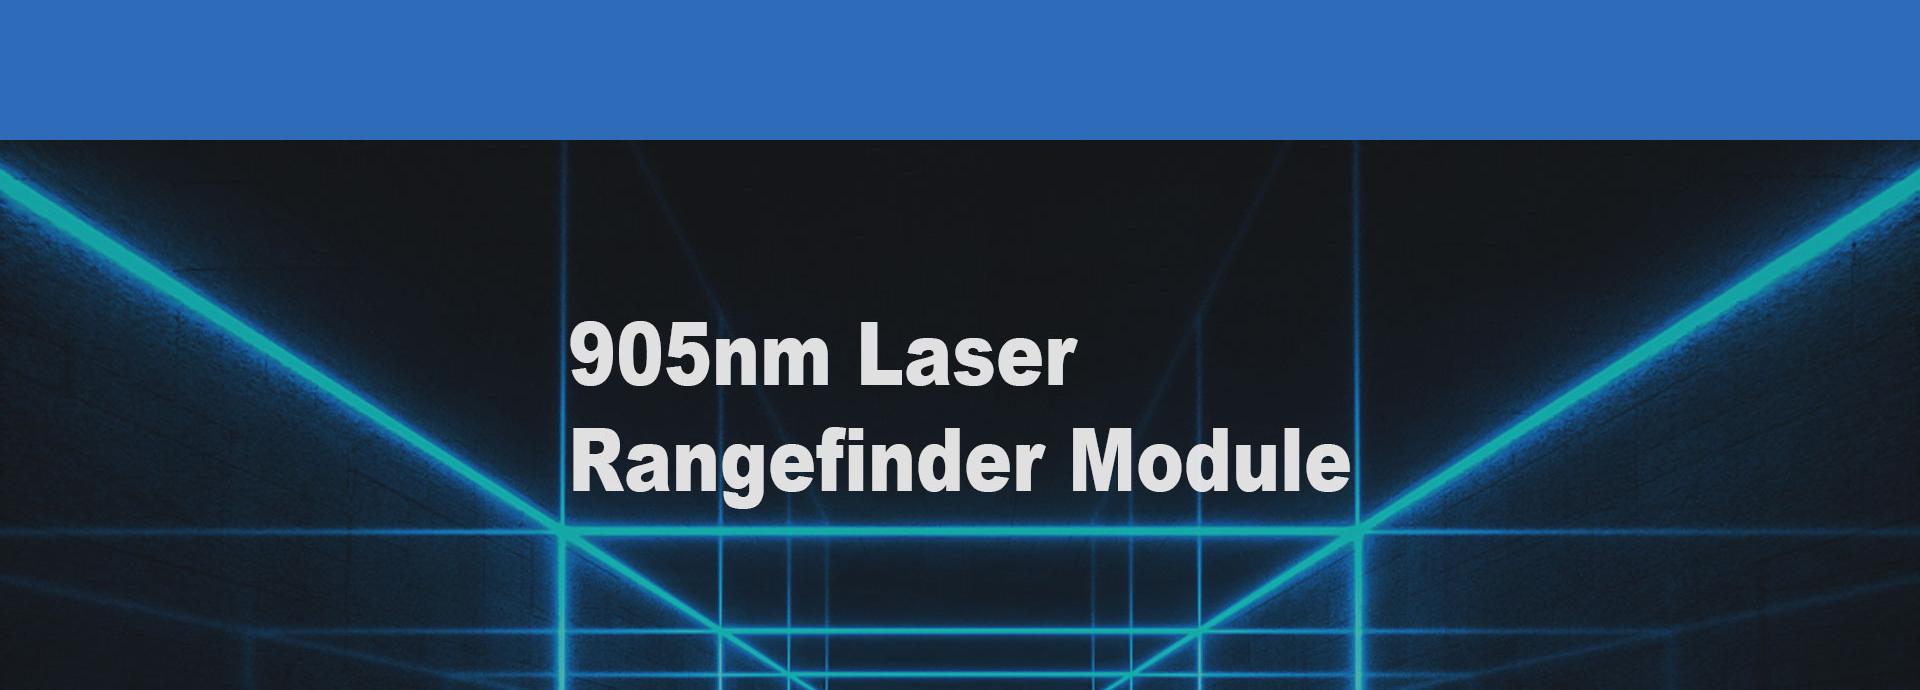 3km Laser Range Finder Module